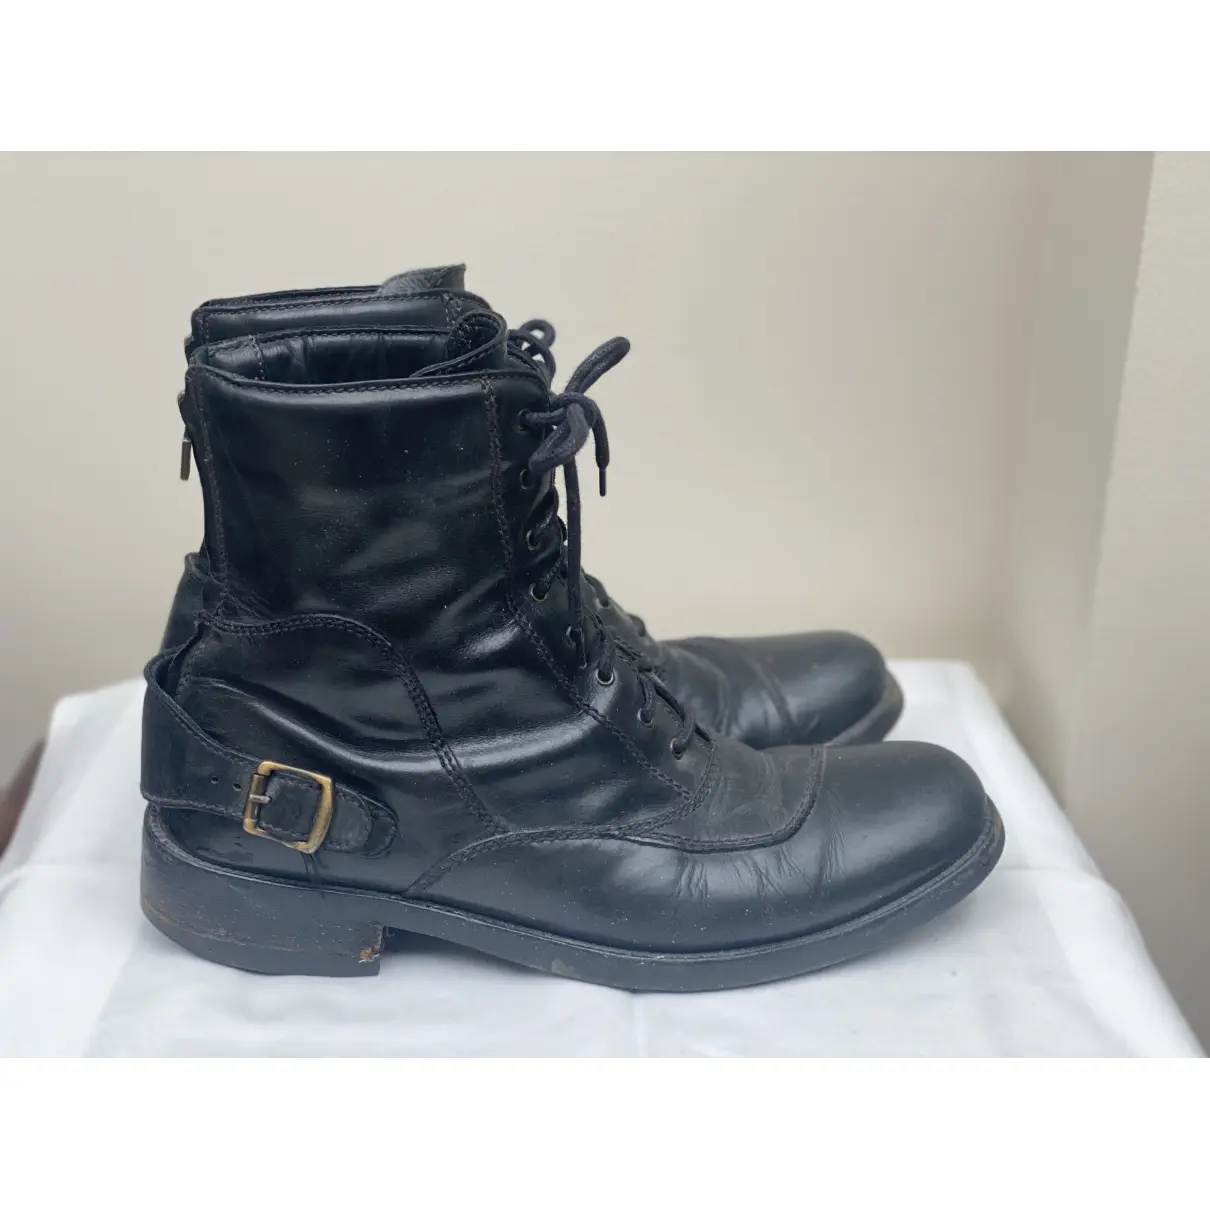 Buy Belstaff Leather boots online